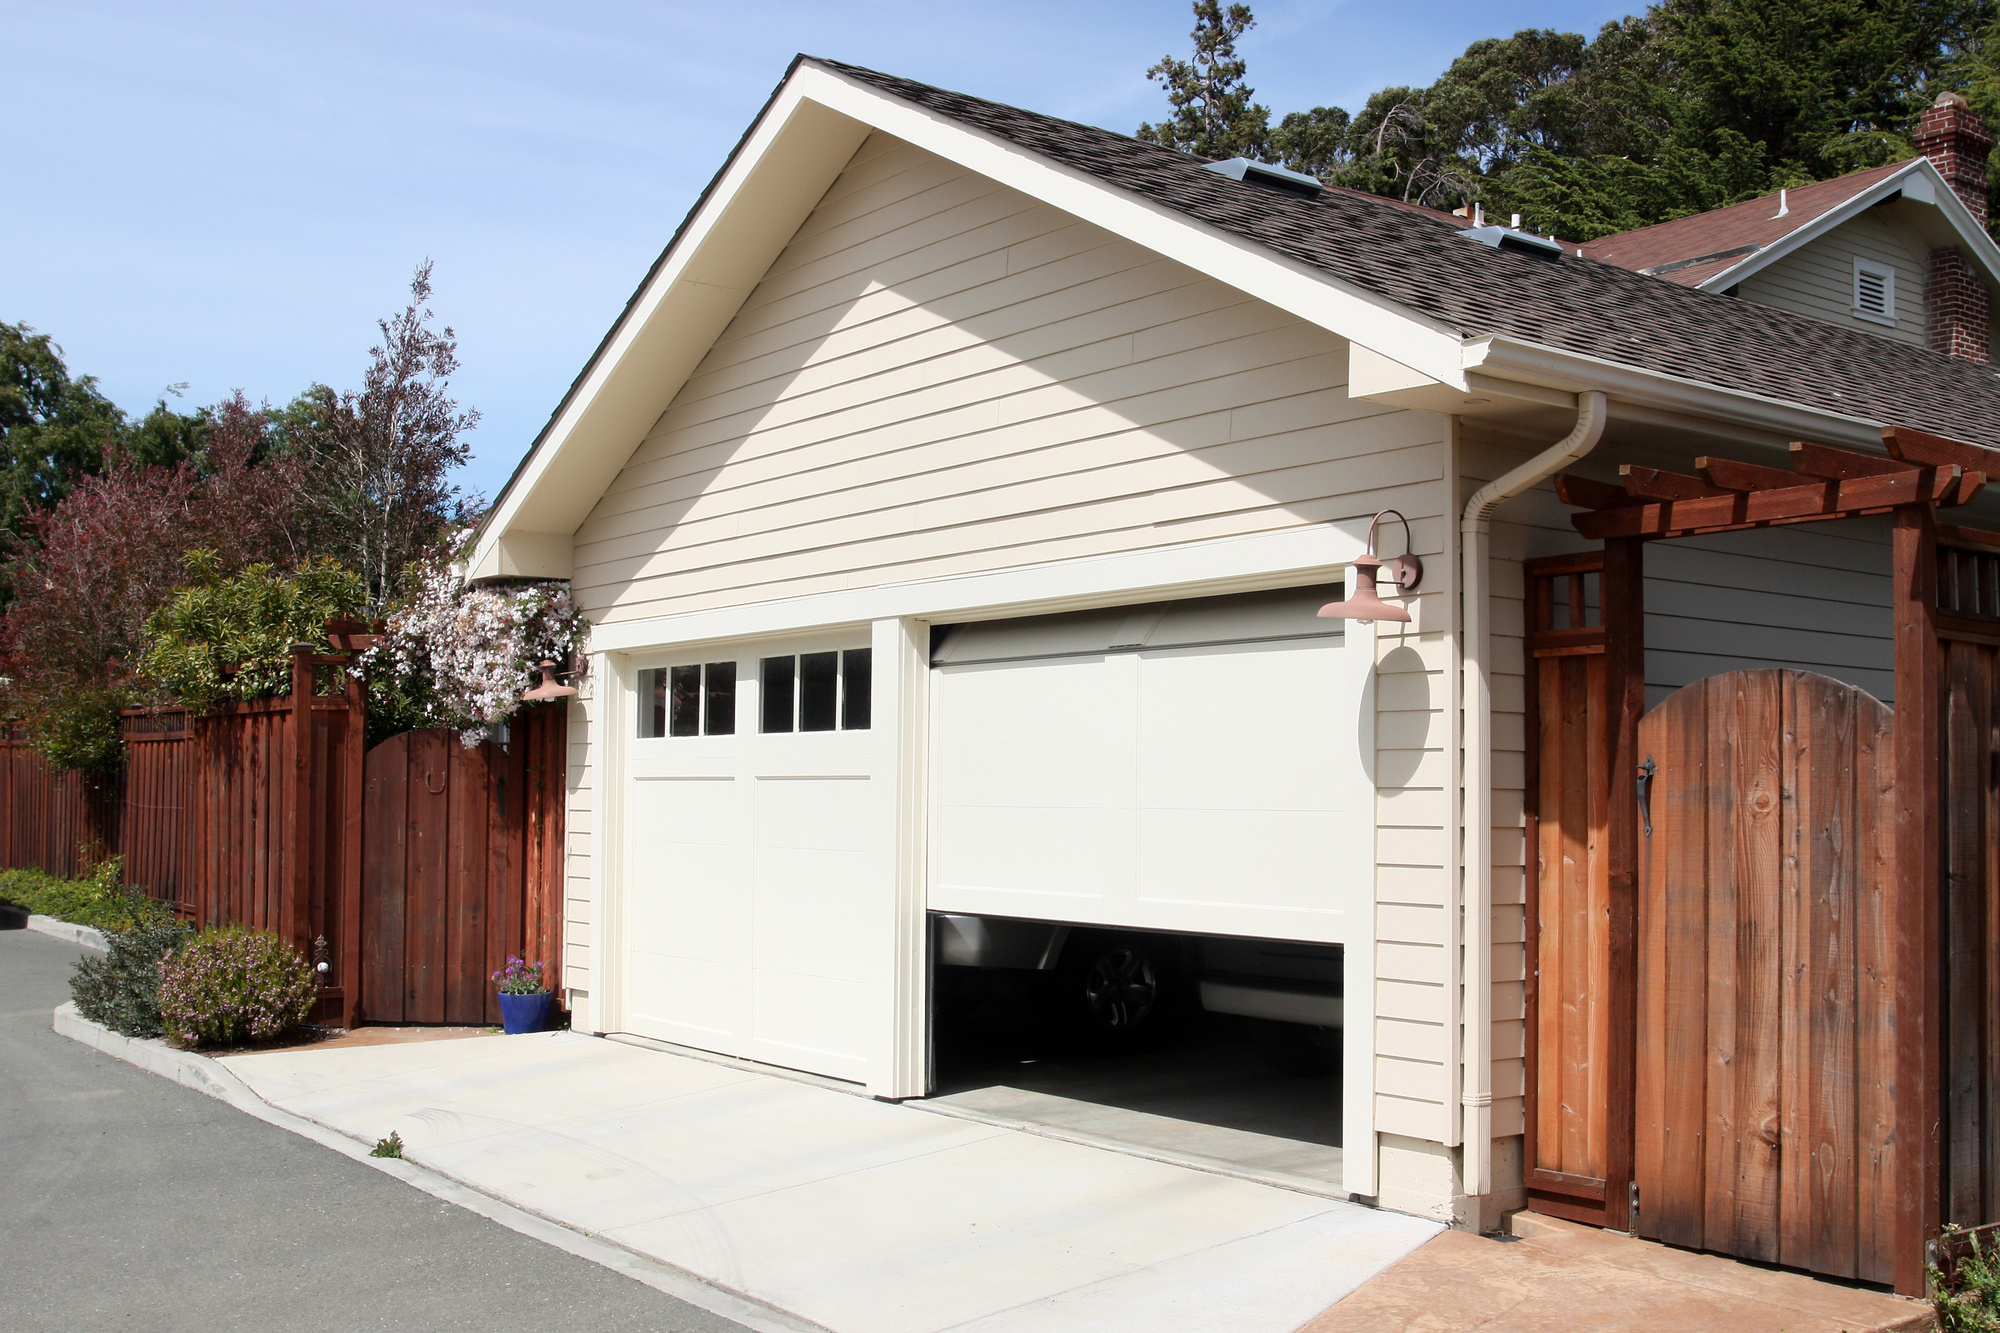 8 Common Garage Door Problems and How to Fix Them - Garage Door Problems